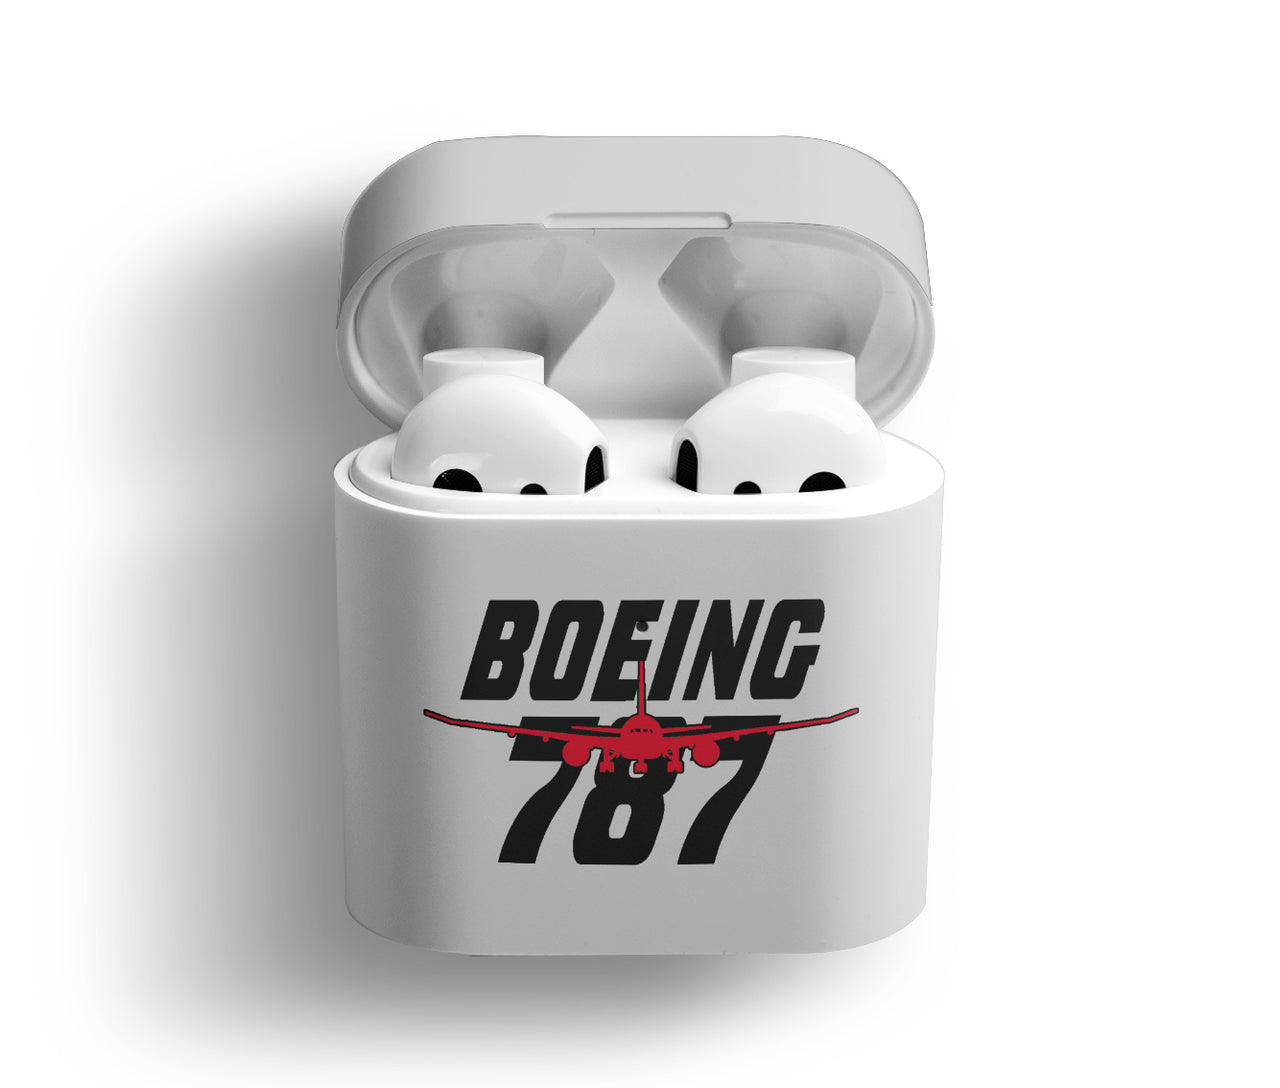 Amazing Boeing 787 Designed AirPods Cases